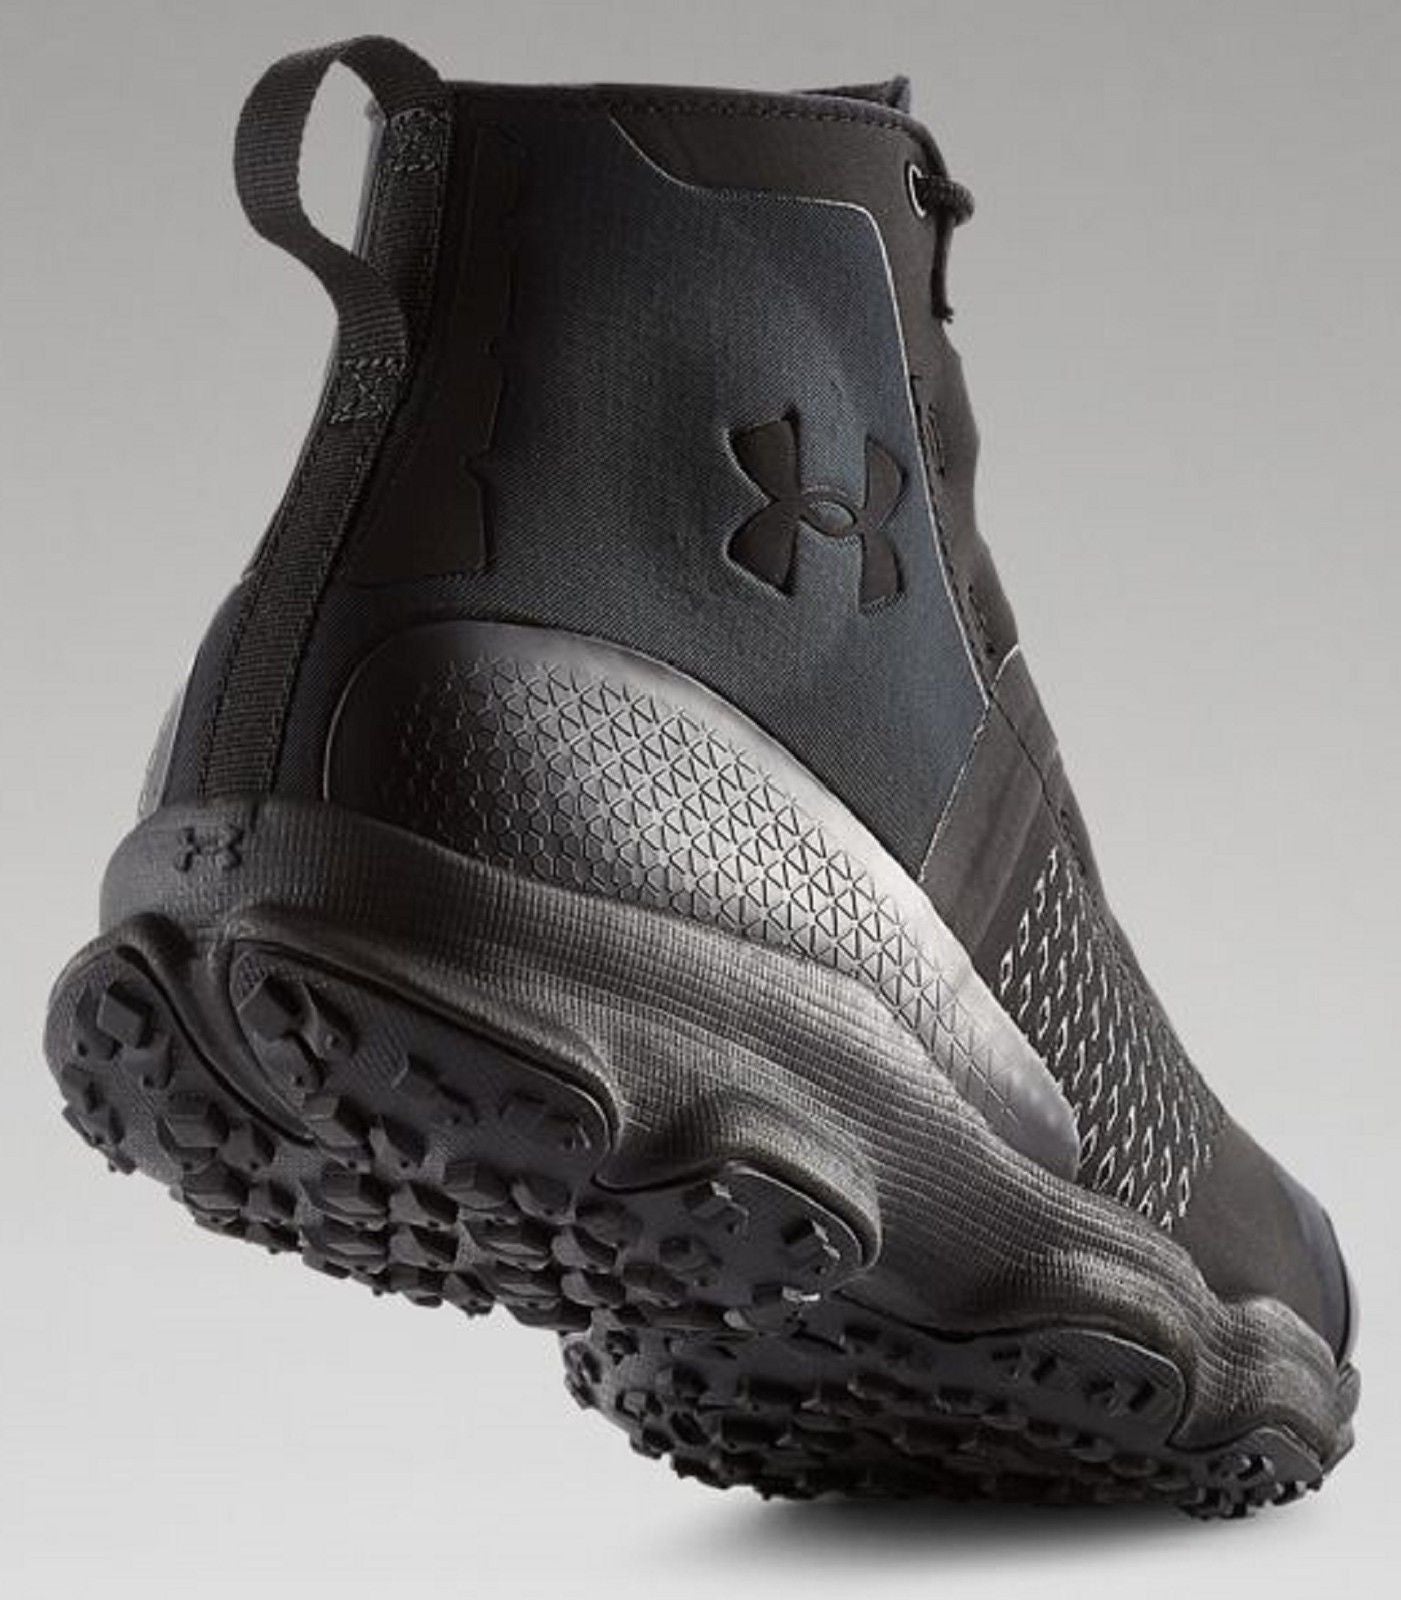 Under Armour Black SpeedFit Hike Boots - Men's UA Versatile